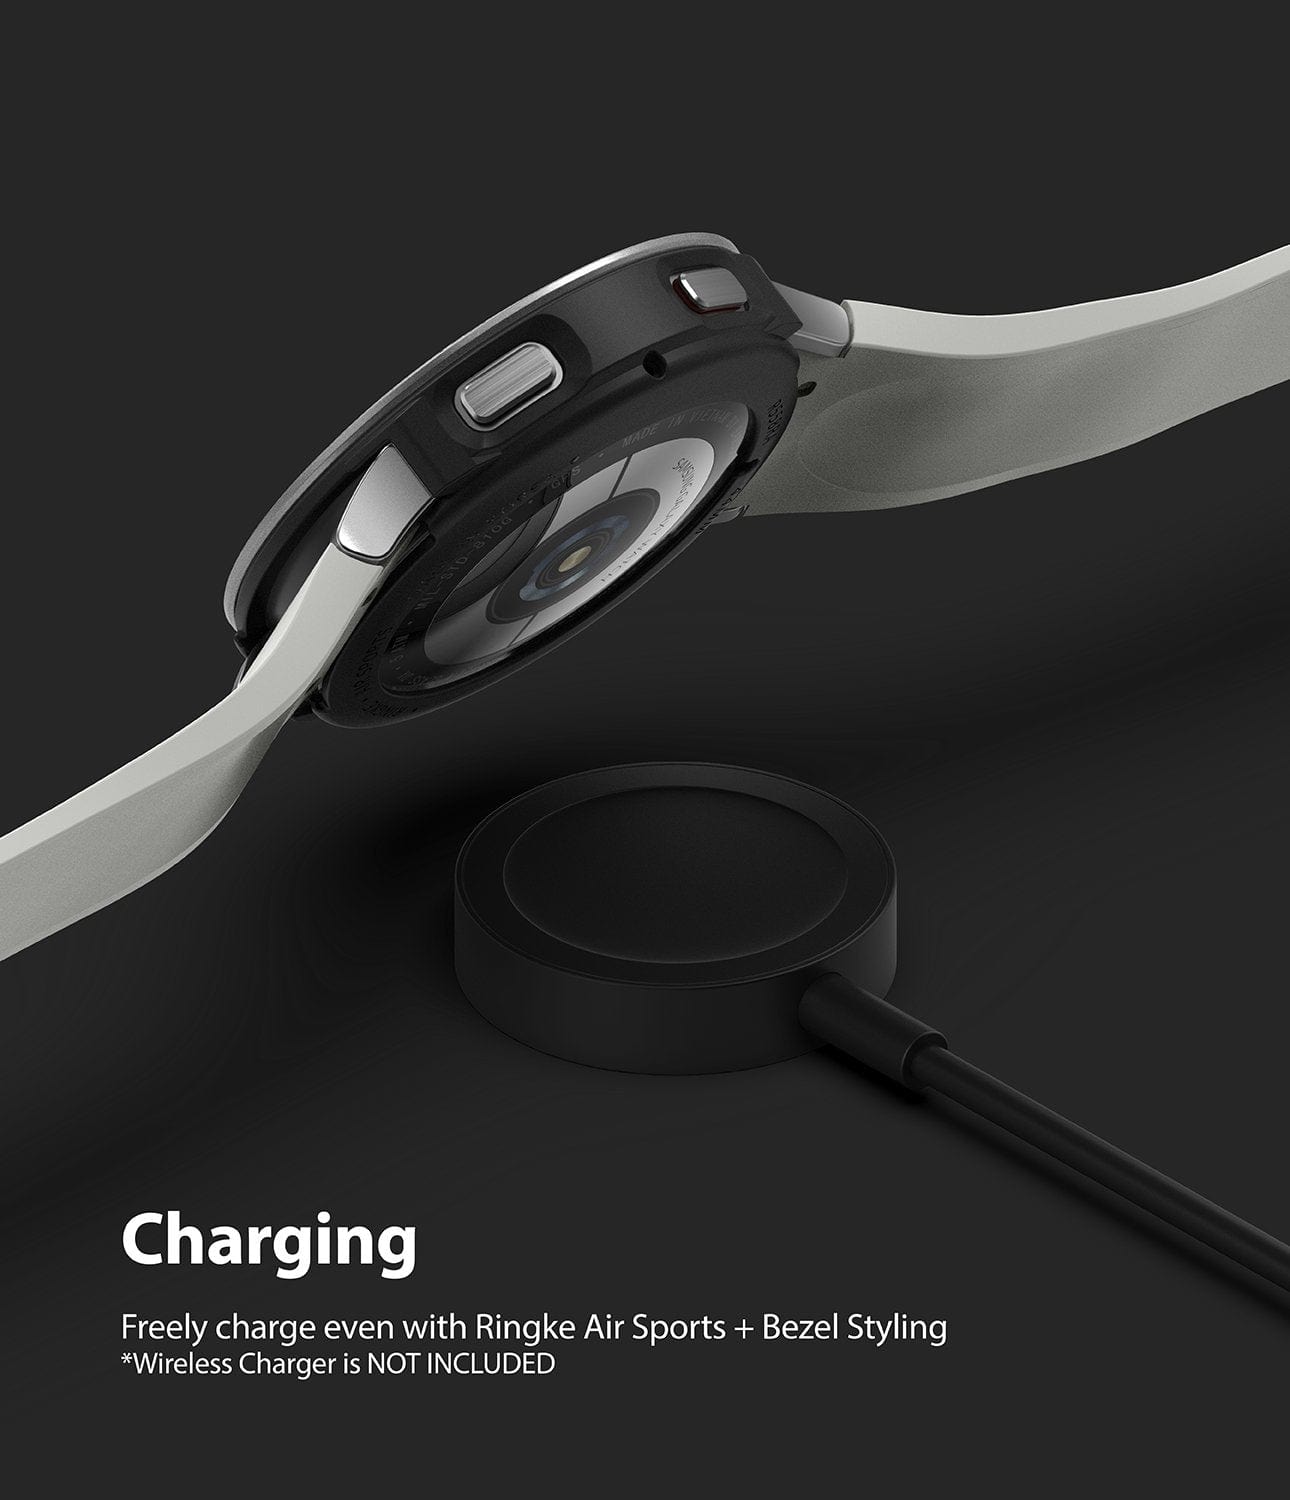 Galaxy Watch 4 44mm Air Sports Black + Silver Bezel Styling By Ringke